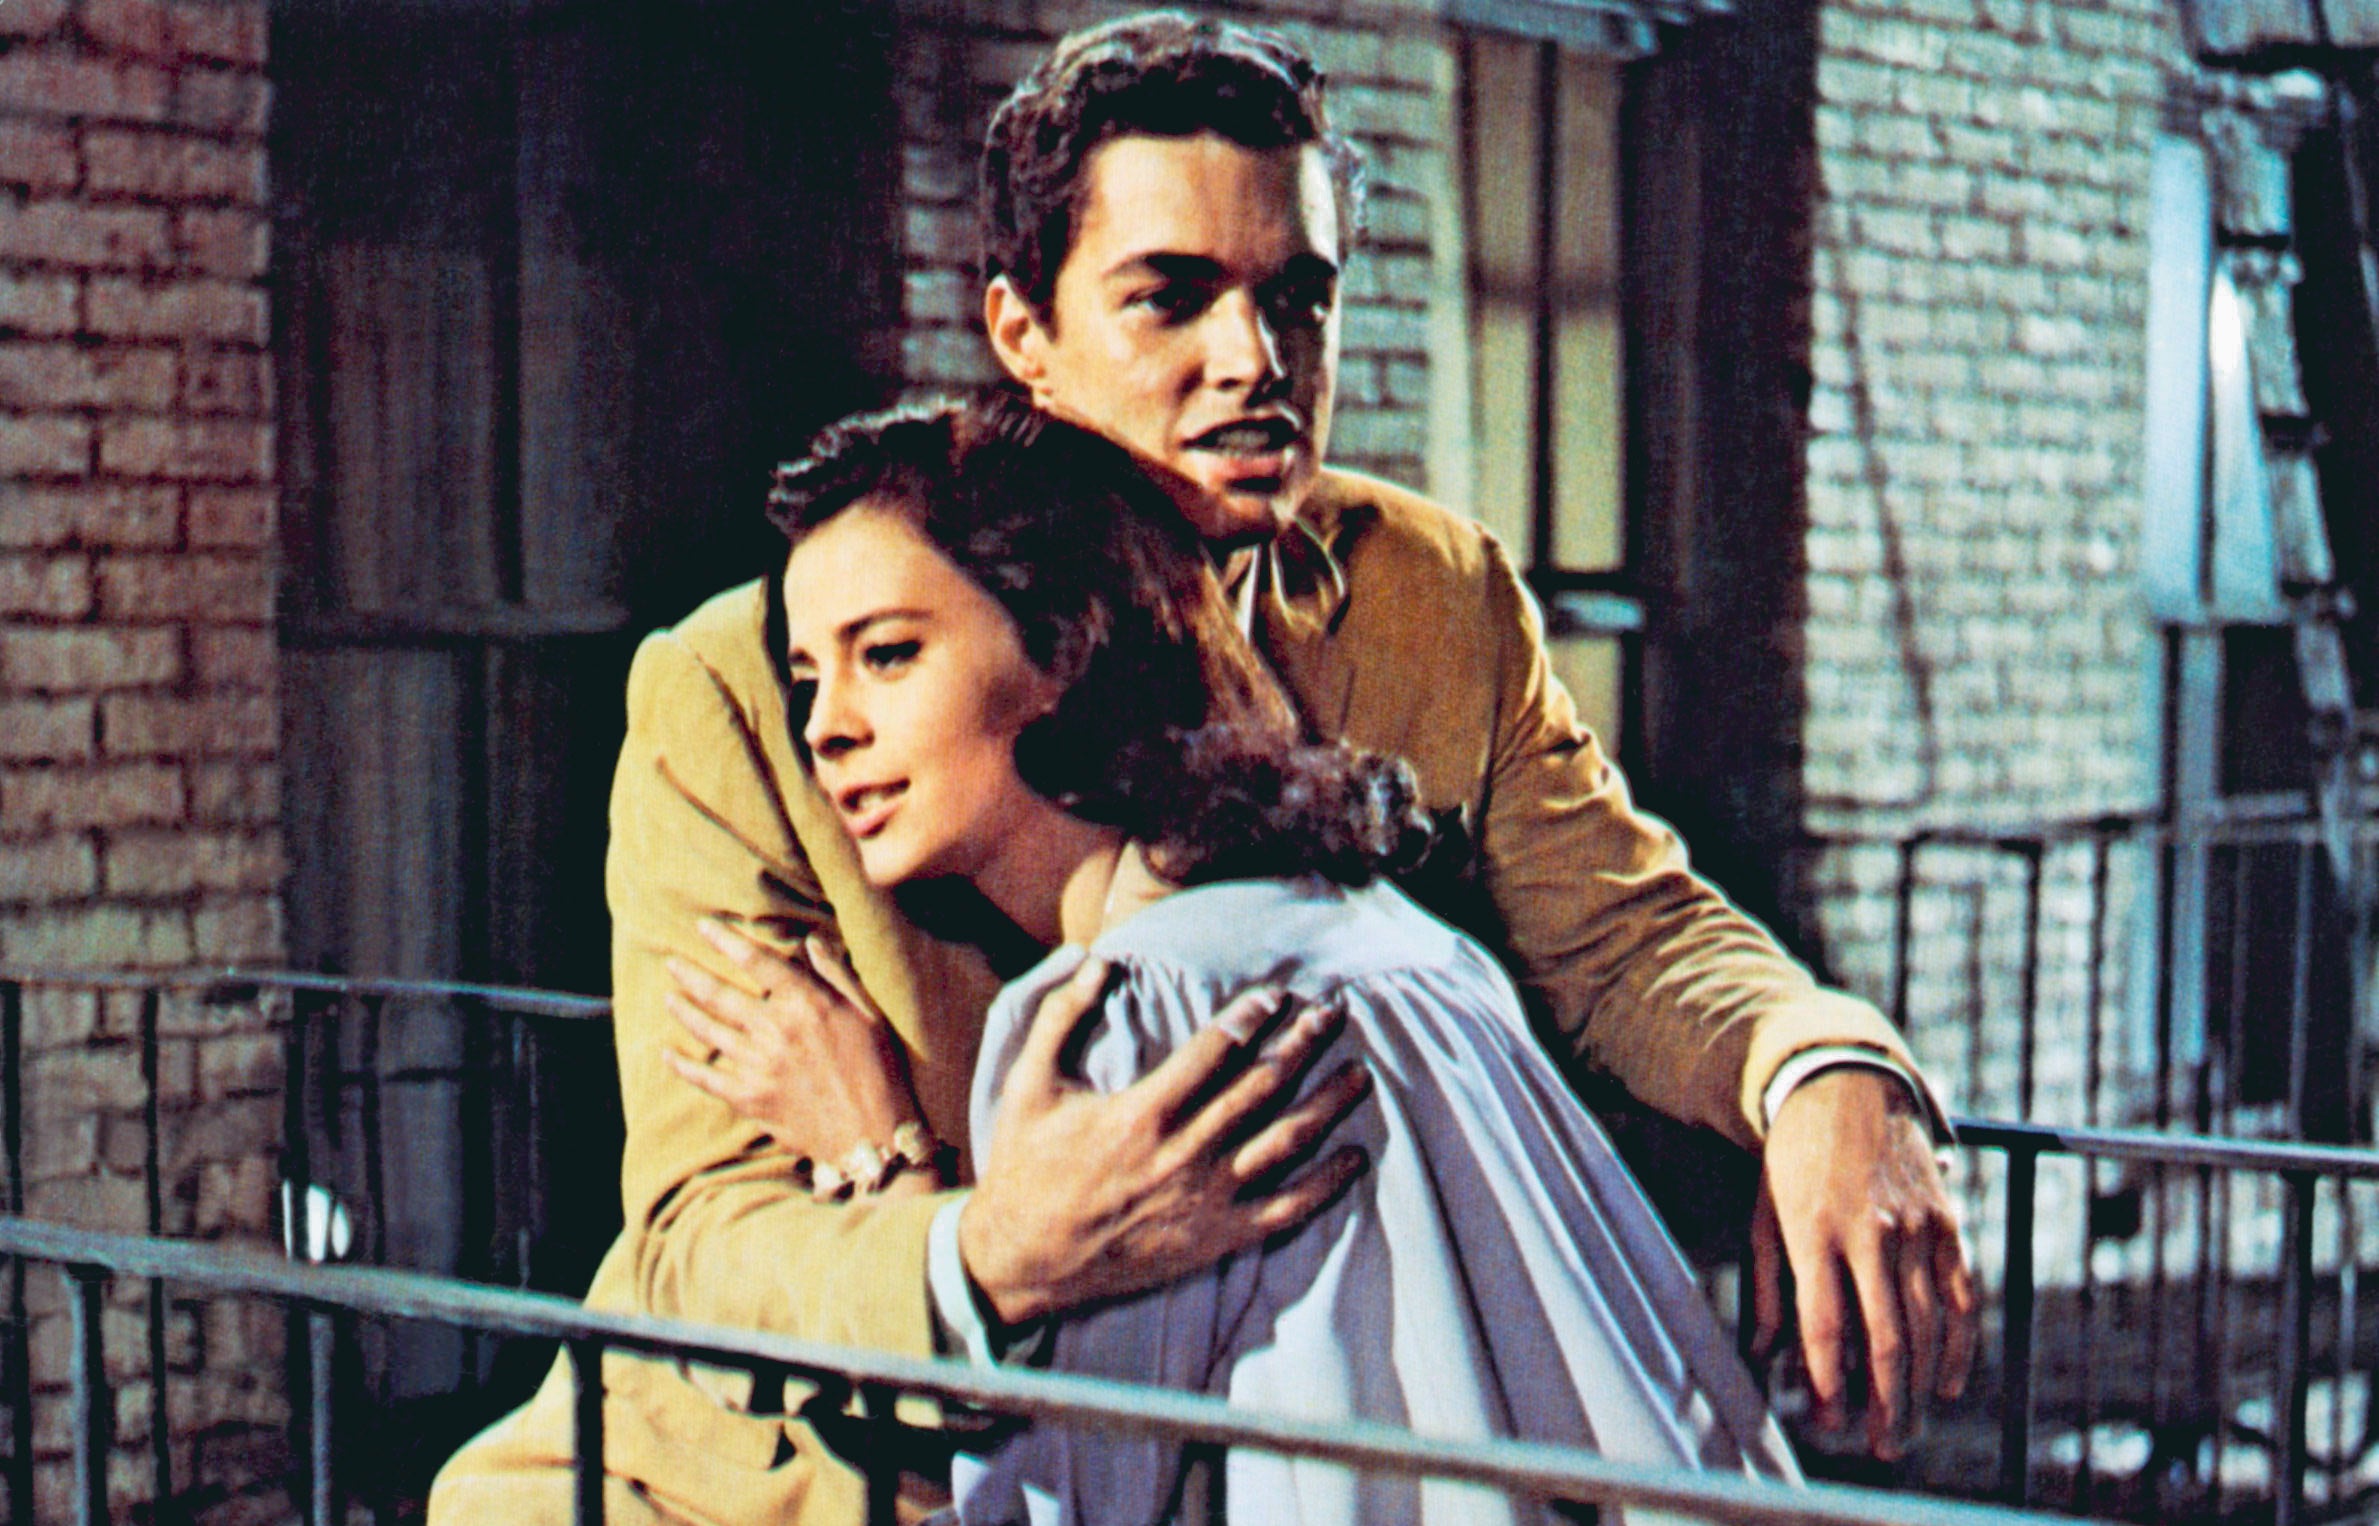 Natalie Wood as Maria in West Side Story hugging Tony. 